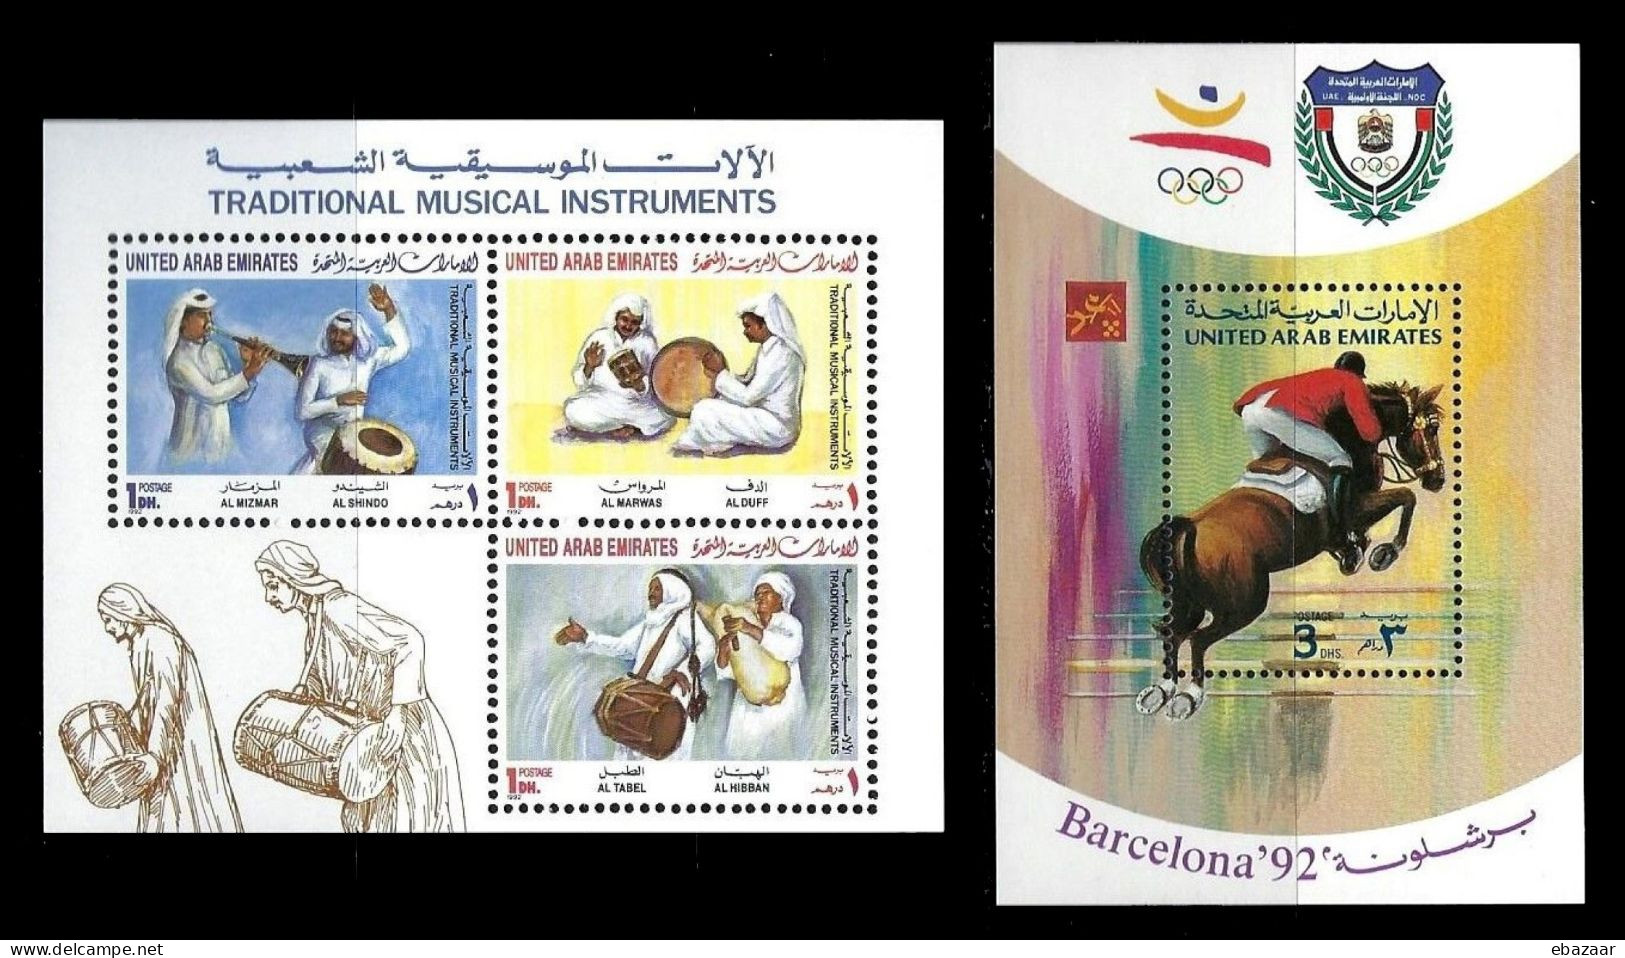 United Arab Emirates 1992 UAE Stamps MNH - Verenigde Arabische Emiraten